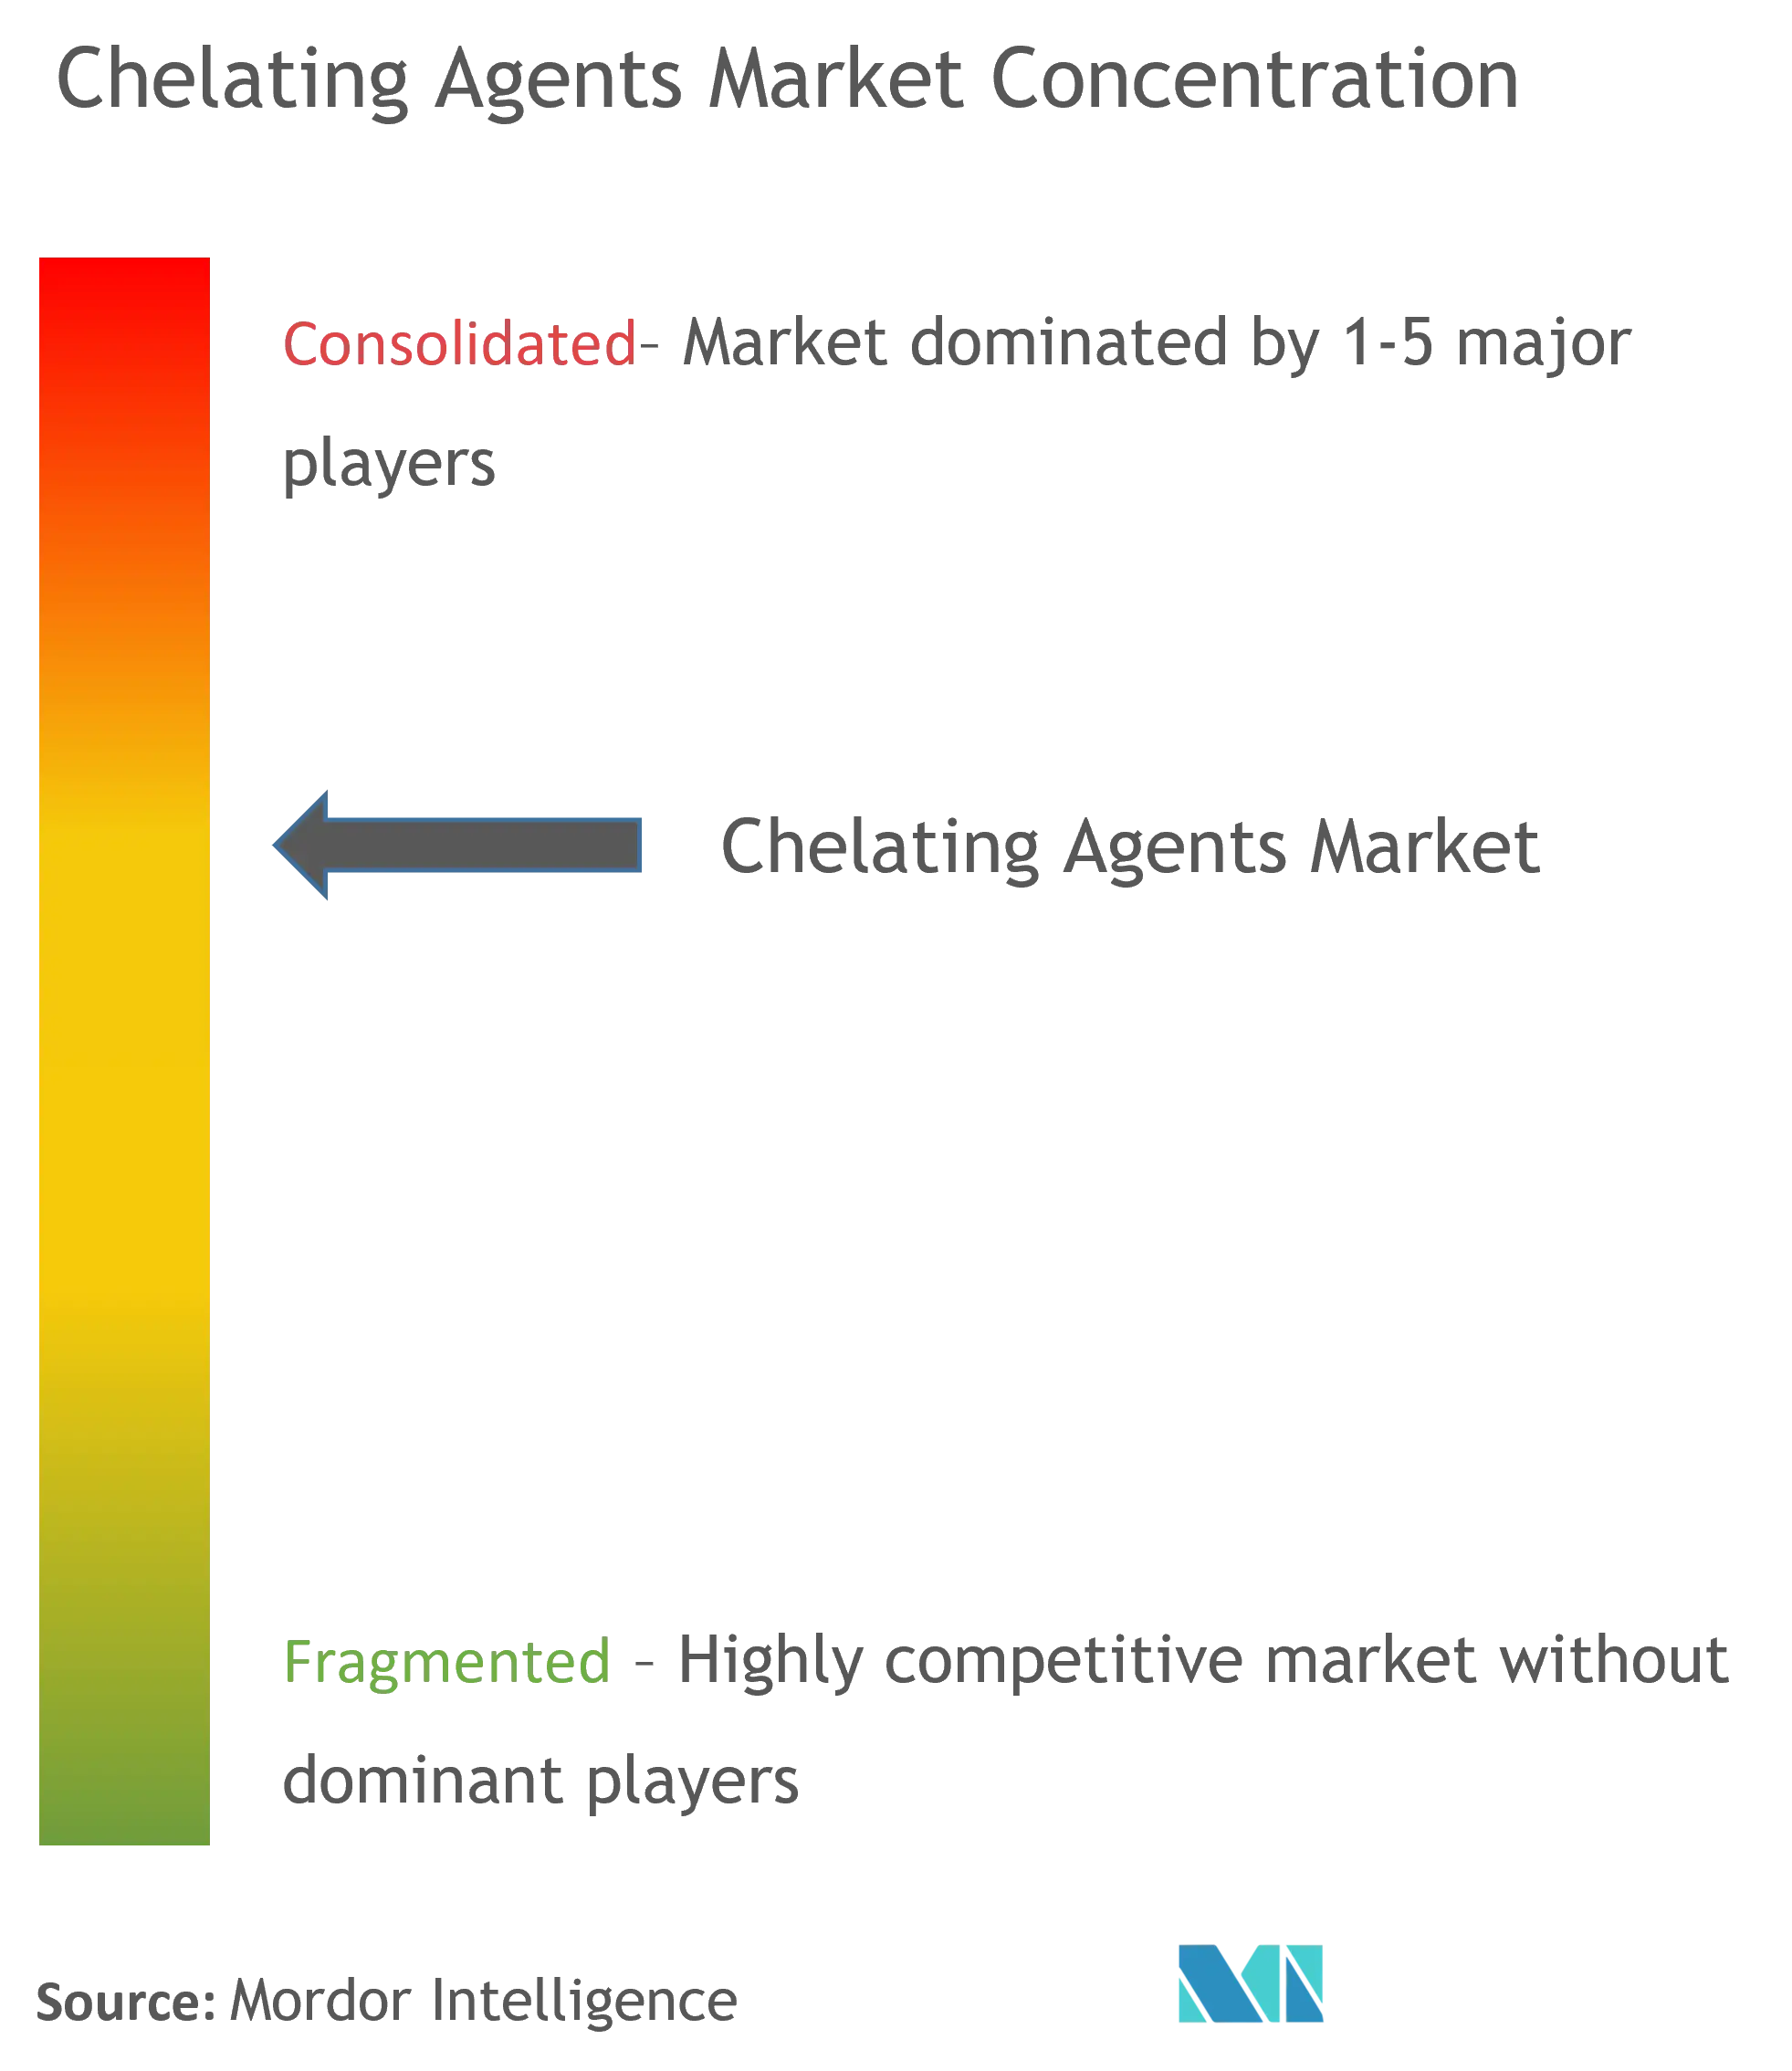 Chelating Agents Market - Market Concentration.png